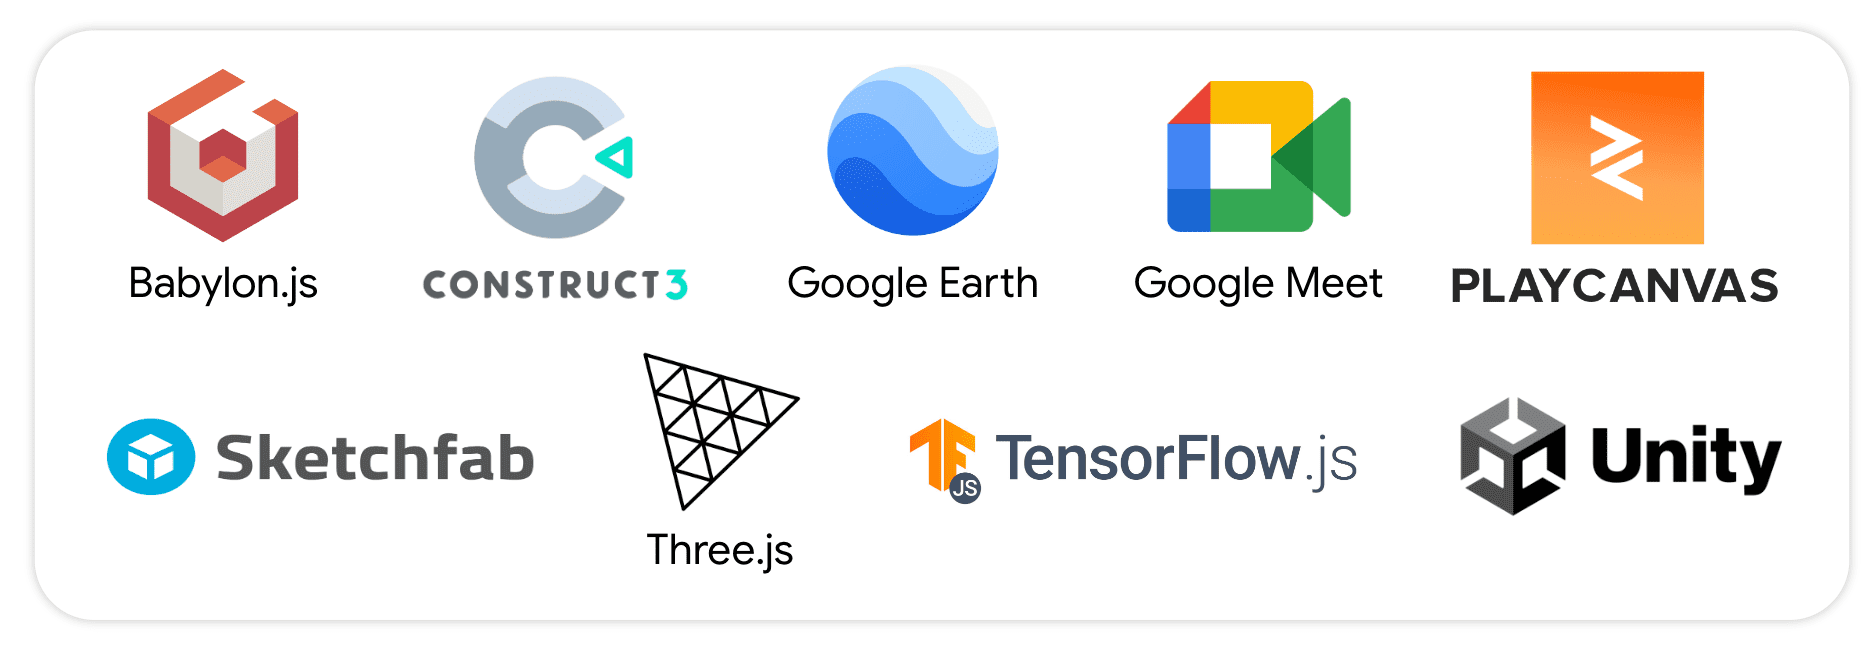 Babylon.js, Build 3, Google Earth, Google Meet, PlayCanvas, Sketchfab, Three.JS, TensorFlow.js e Unity.